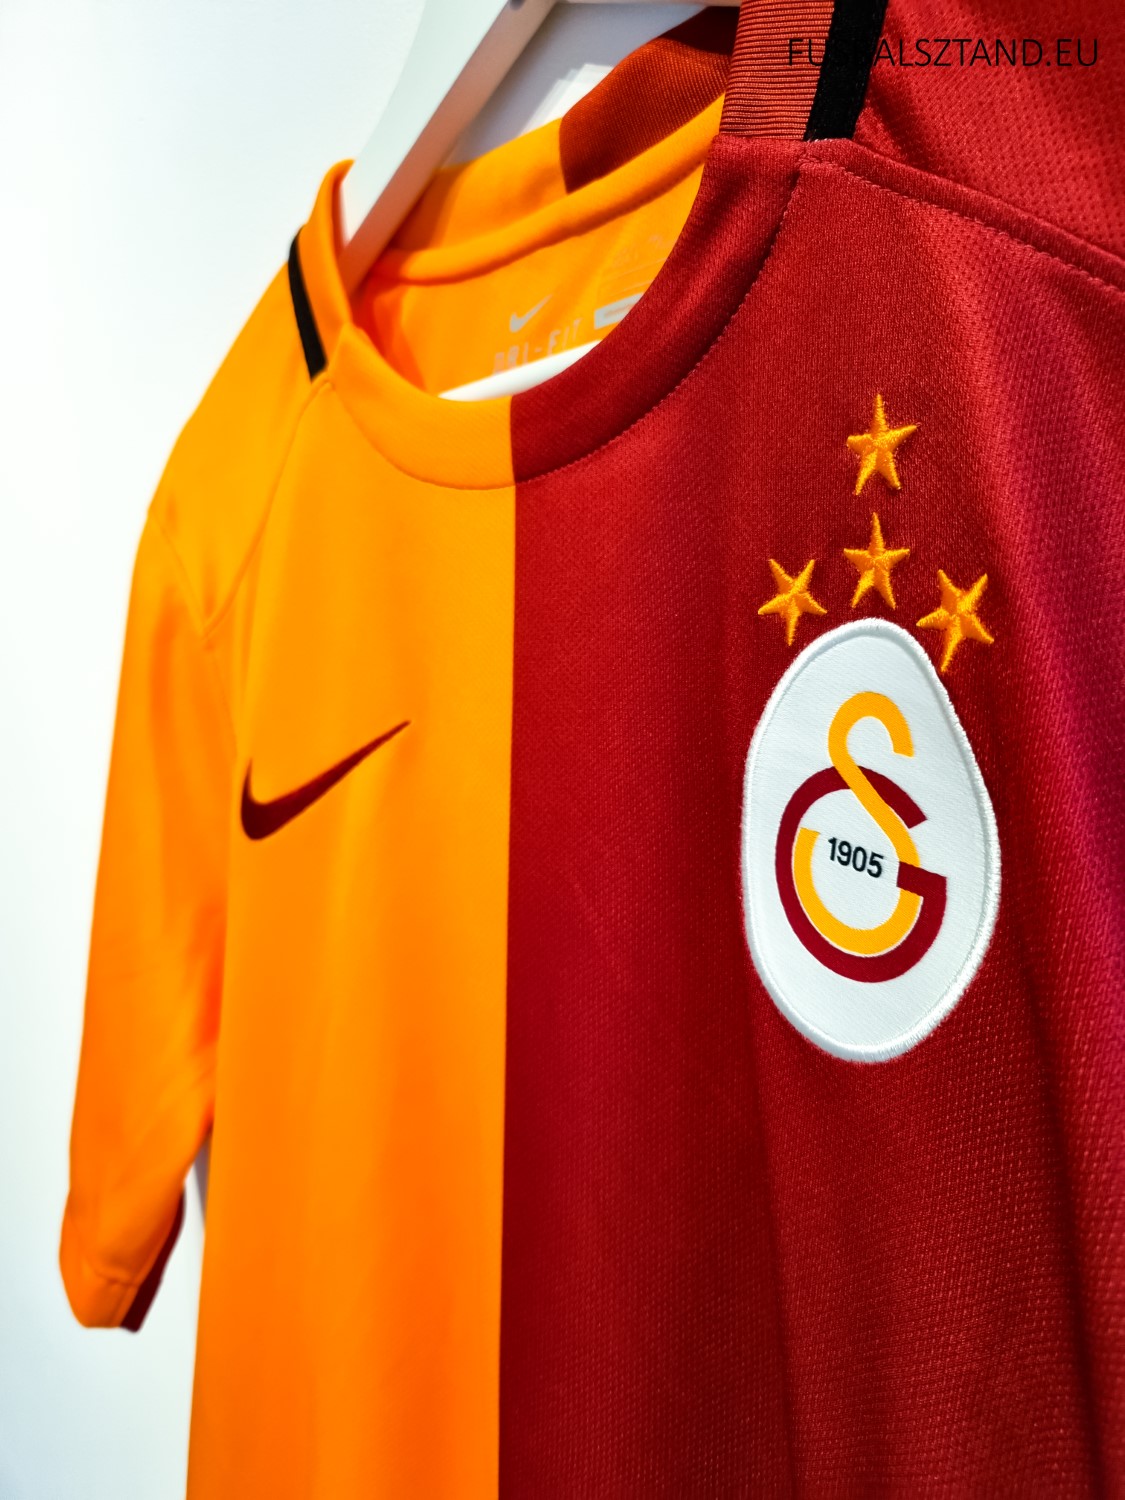 Galatasaray Stambuł 2015/16 Home S Podolski 658816-629